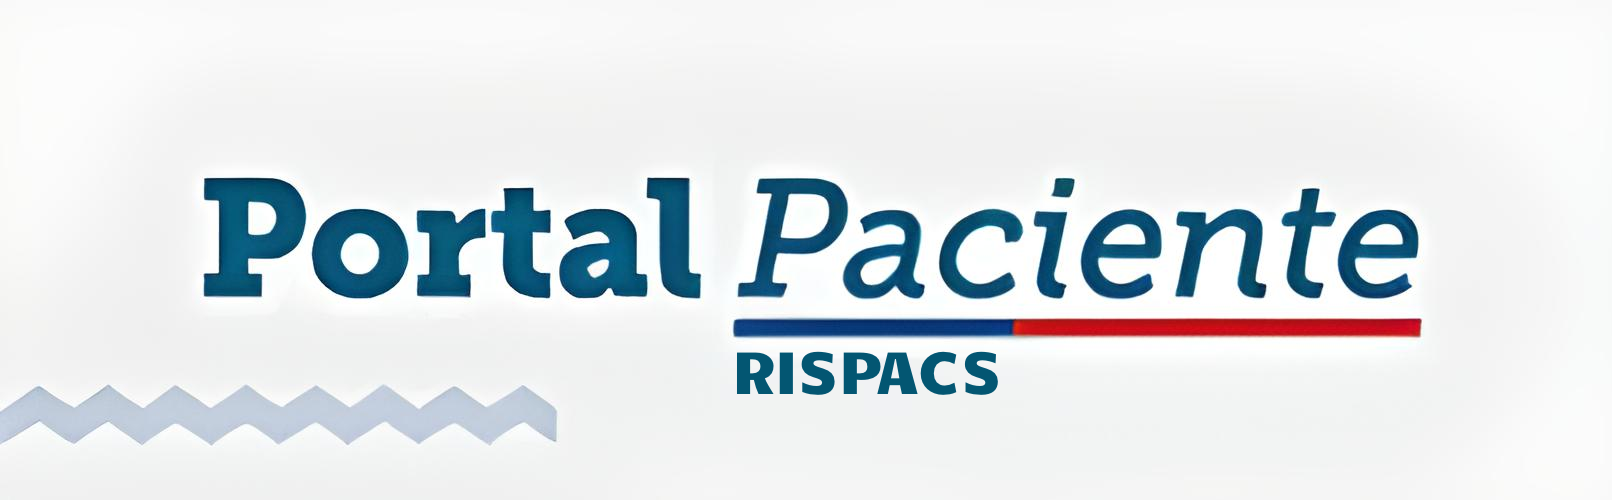 Portal Paciente RISPACS